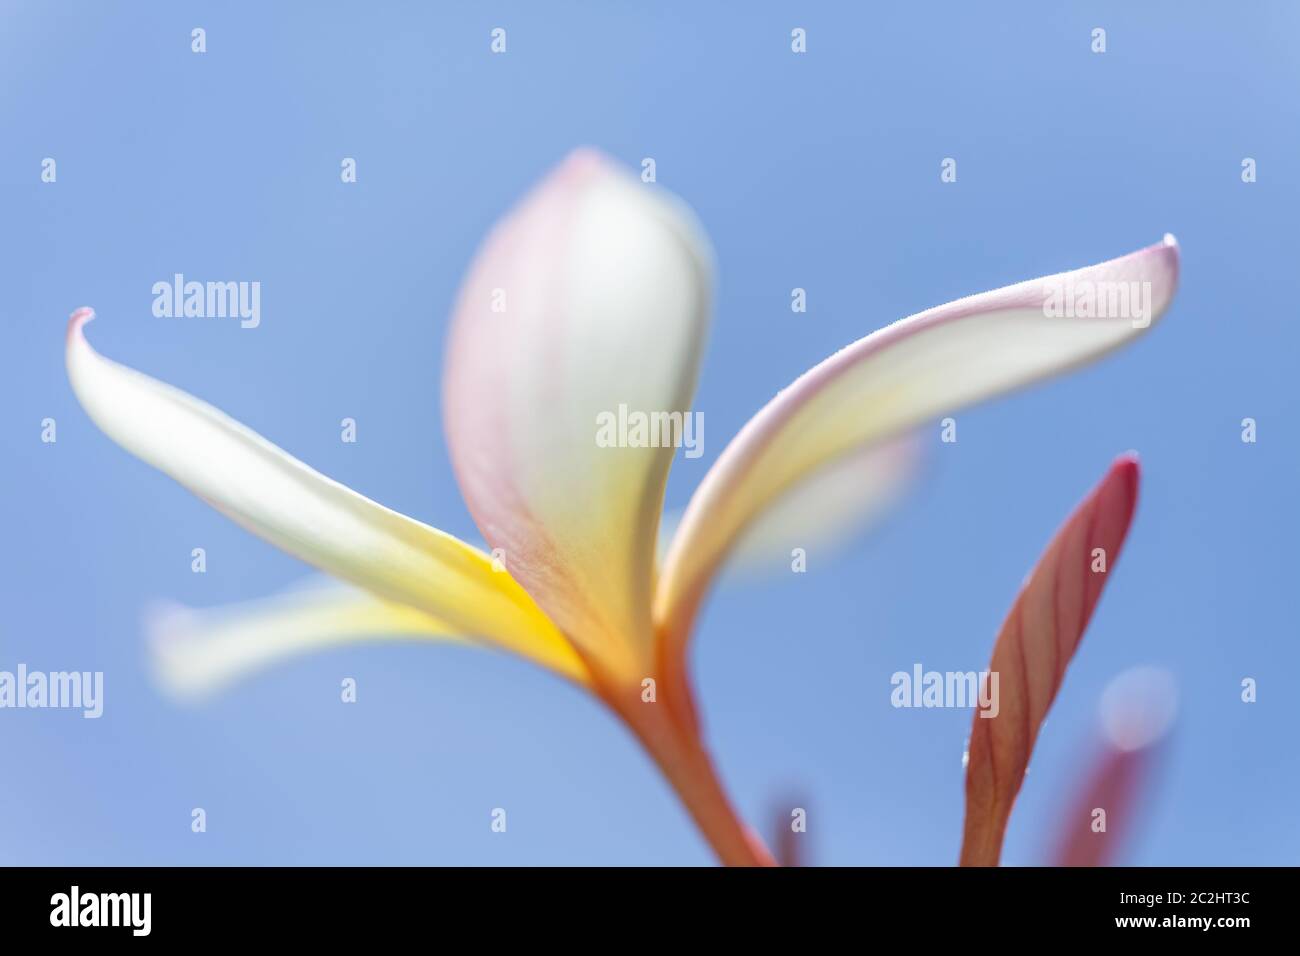 white and yellow frangipani flower Stock Photo